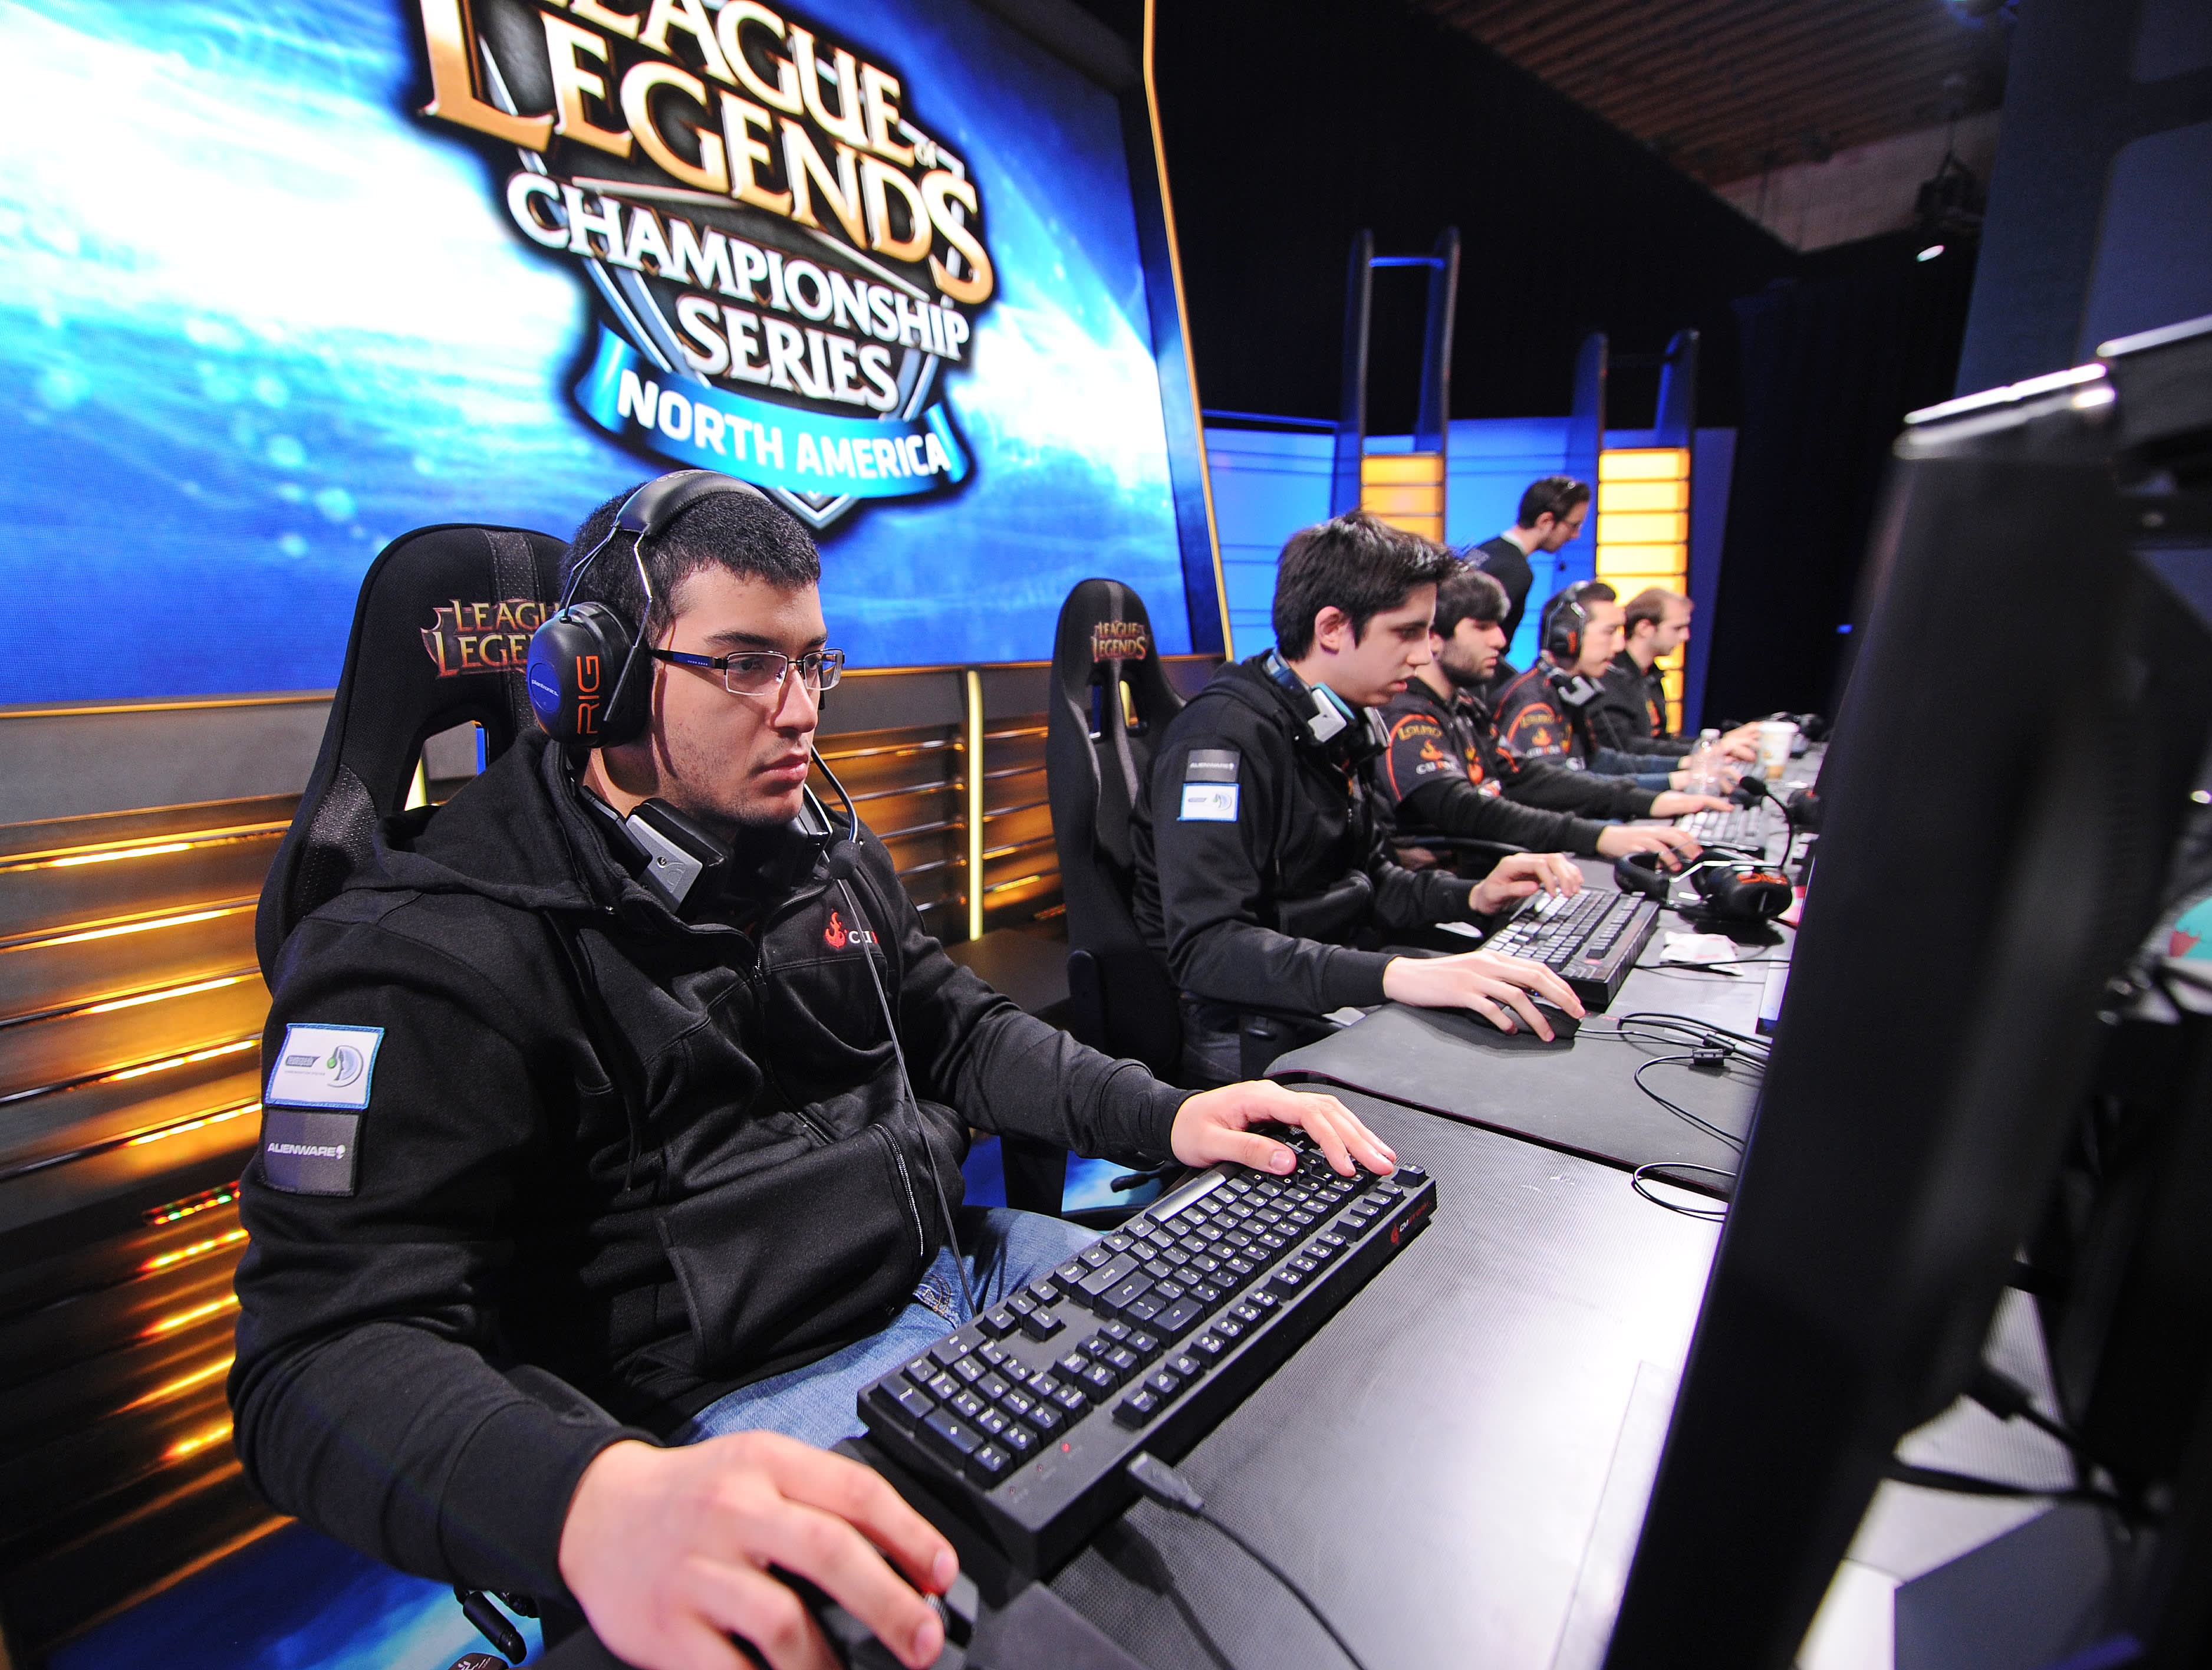 Revolucionario Avanzado granja League of Legends may be tops in esports. Here's why